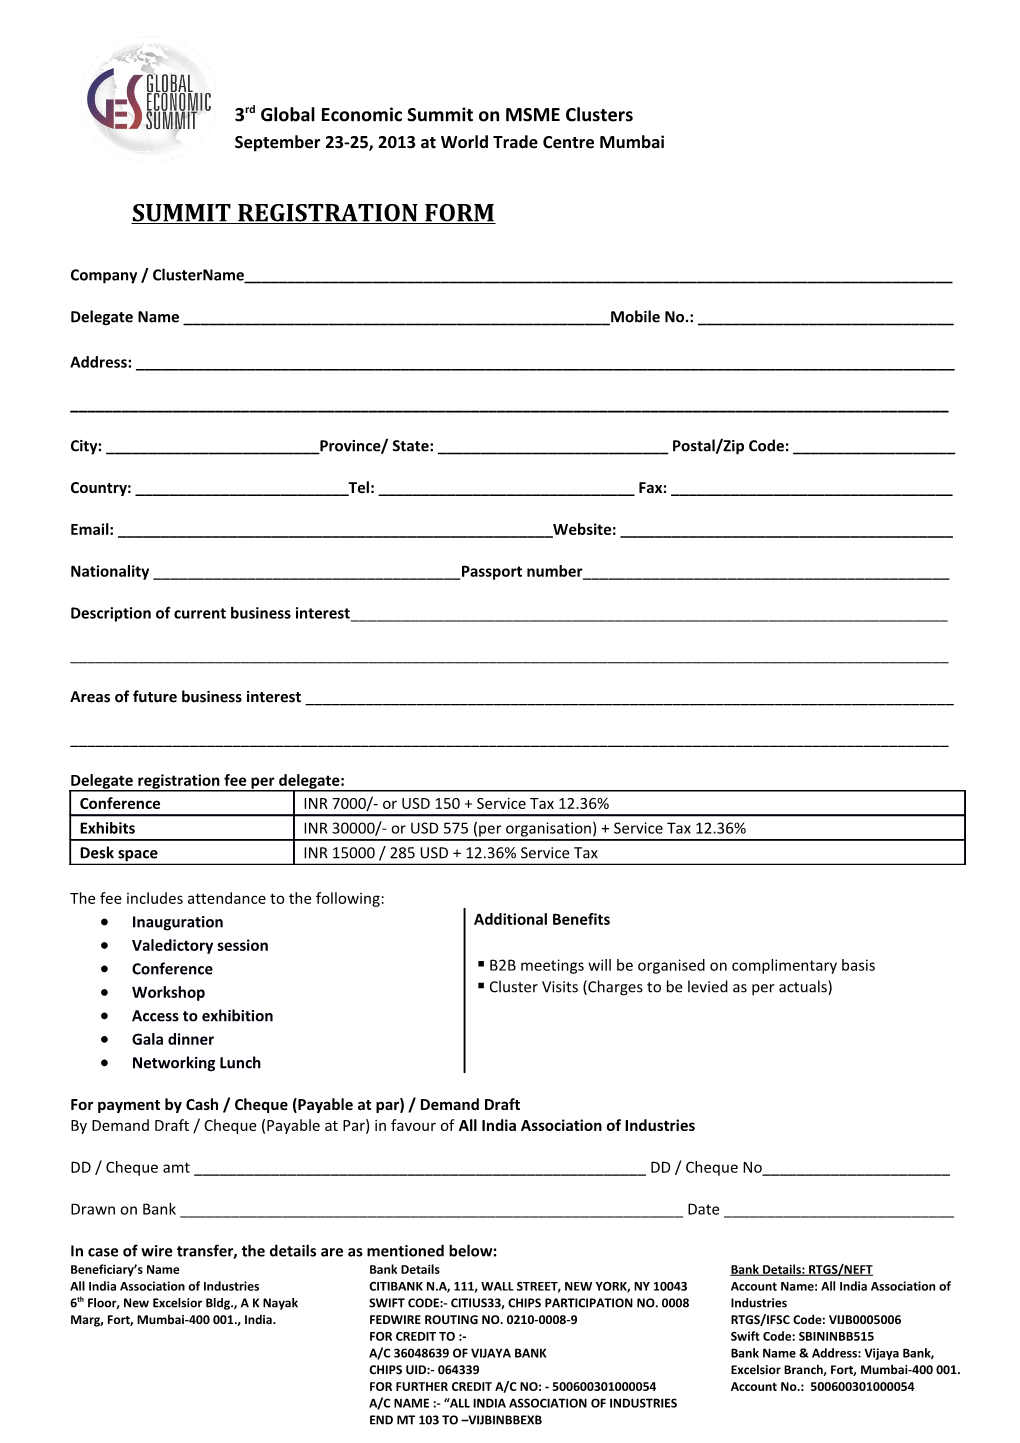 Summit Registration Form